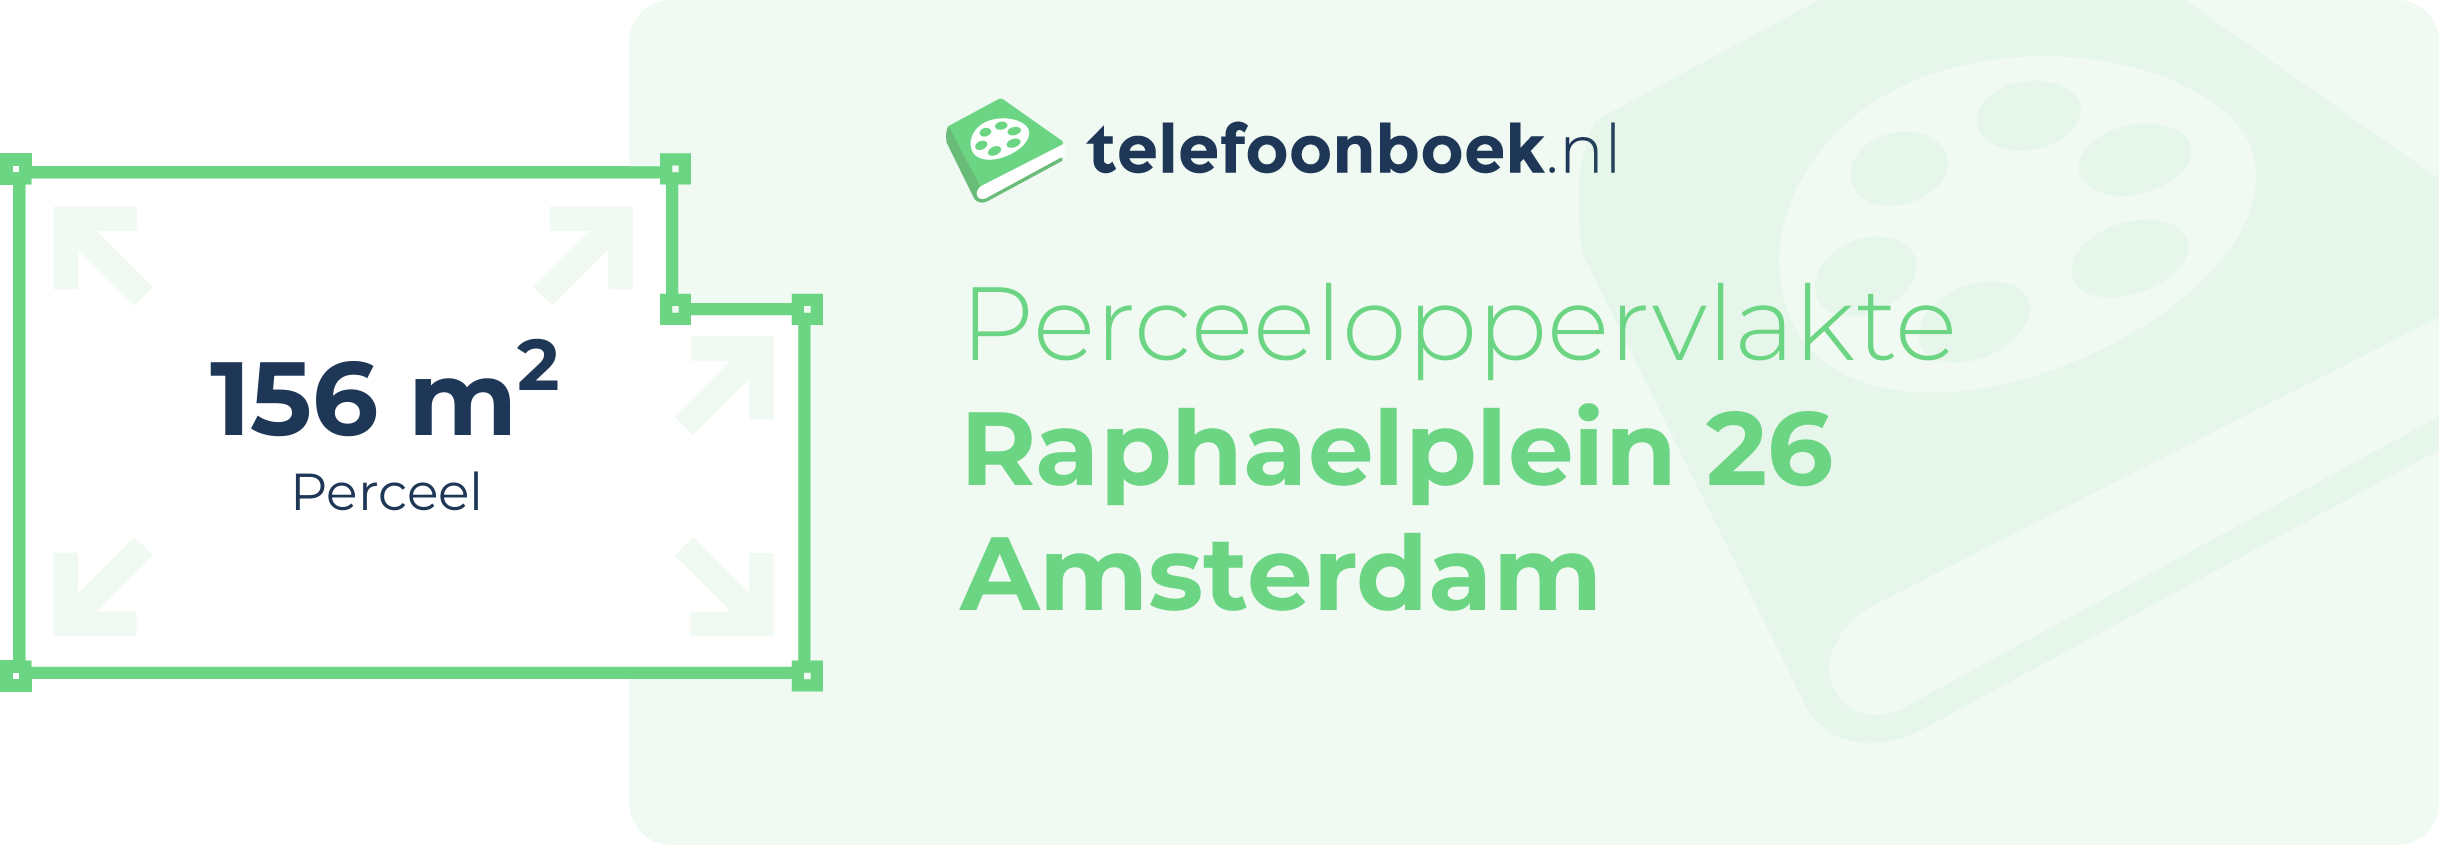 Perceeloppervlakte Raphaelplein 26 Amsterdam